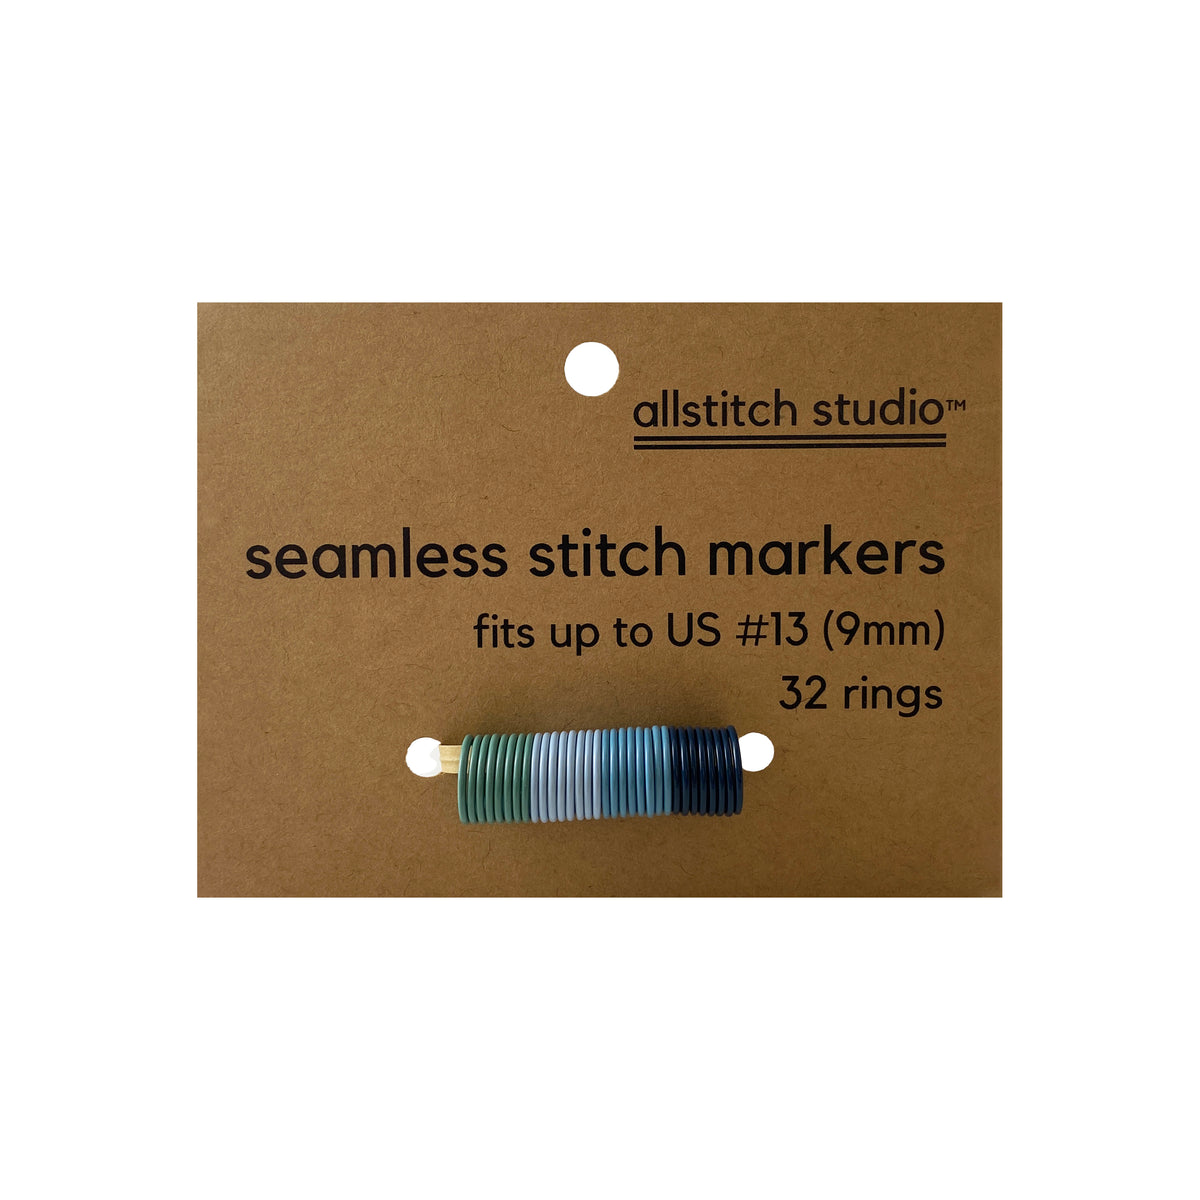 Stitch Markers from Allstitch Studio – Seed Stitch